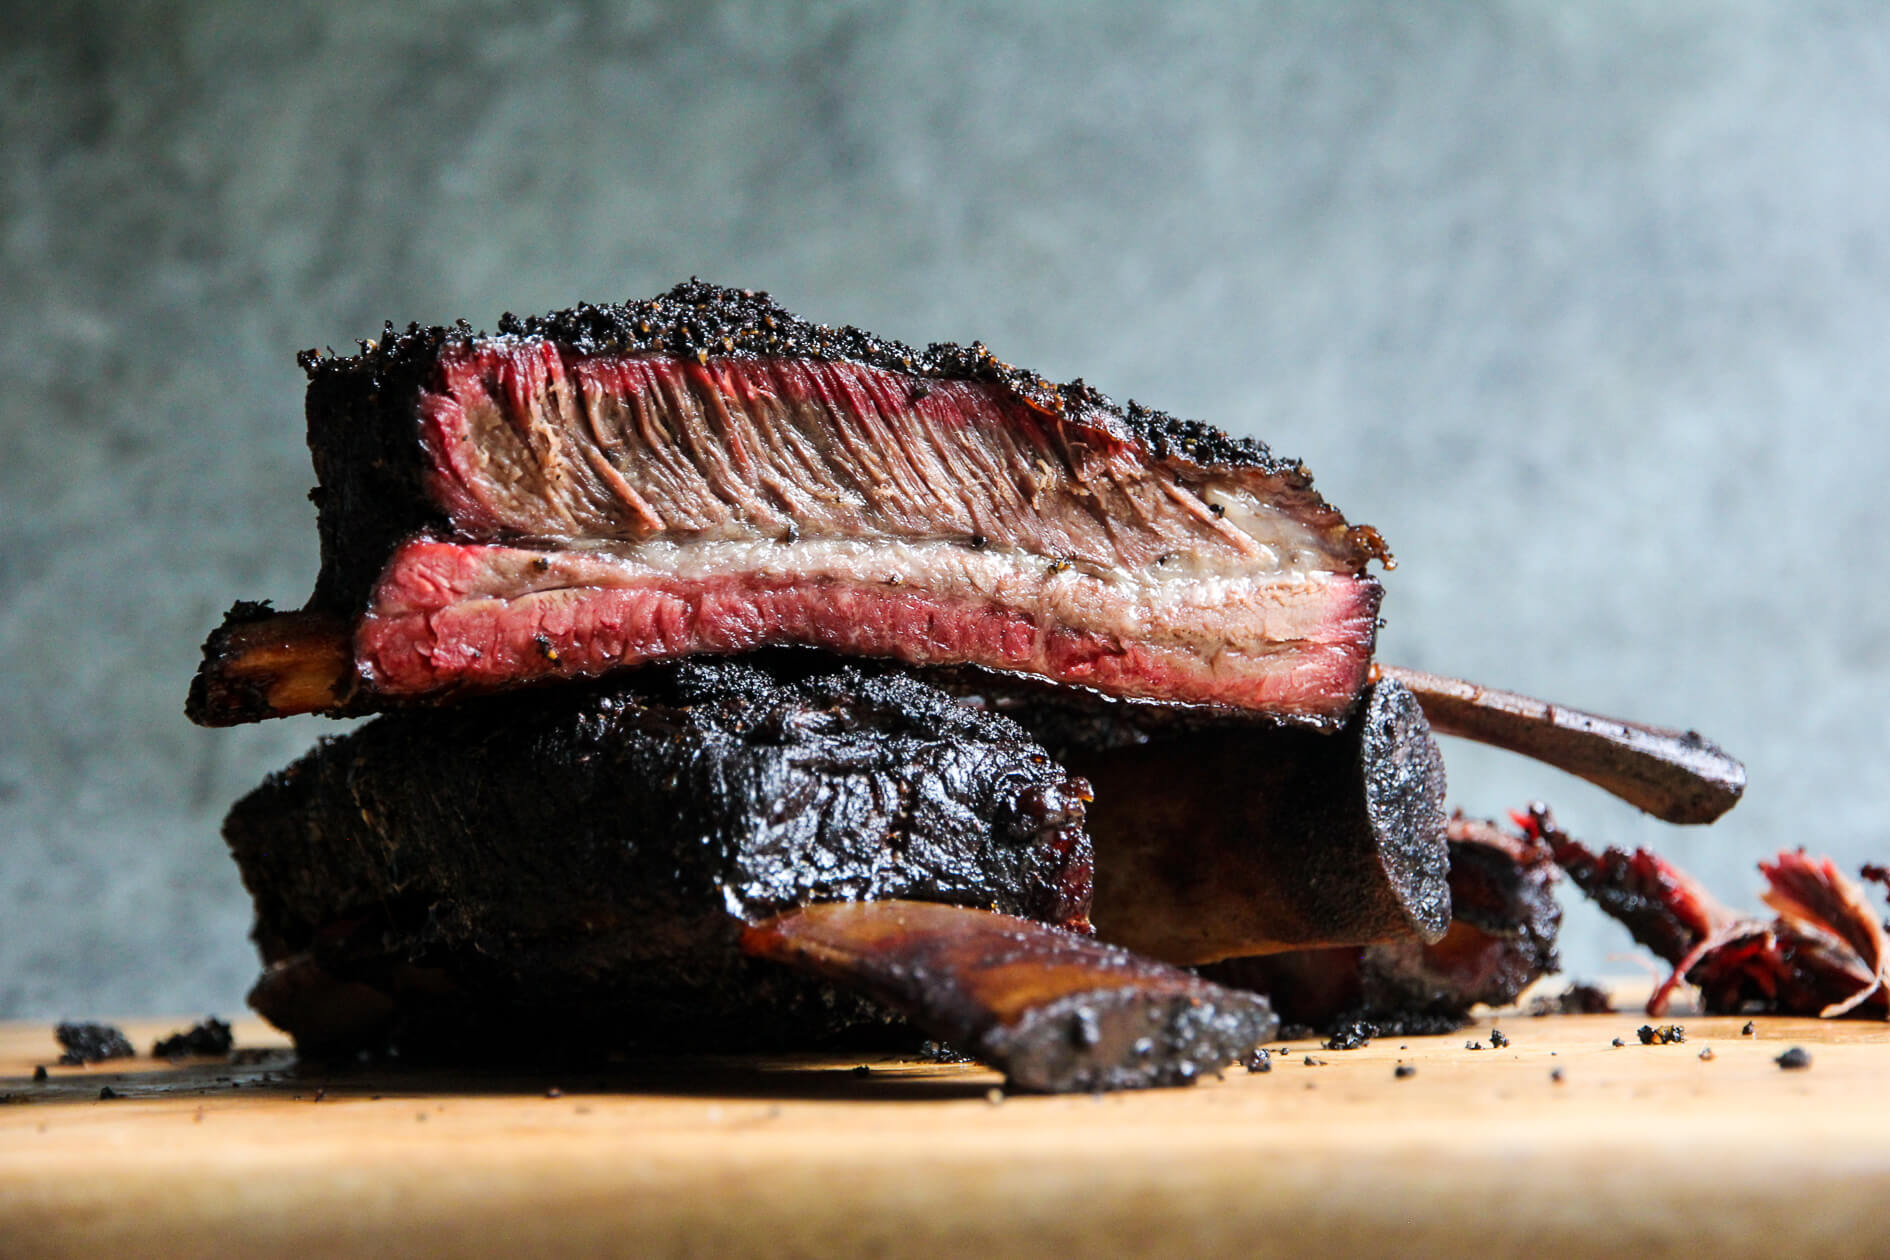 Beef vs Pork Ribs: Deciding the Meaty Battle